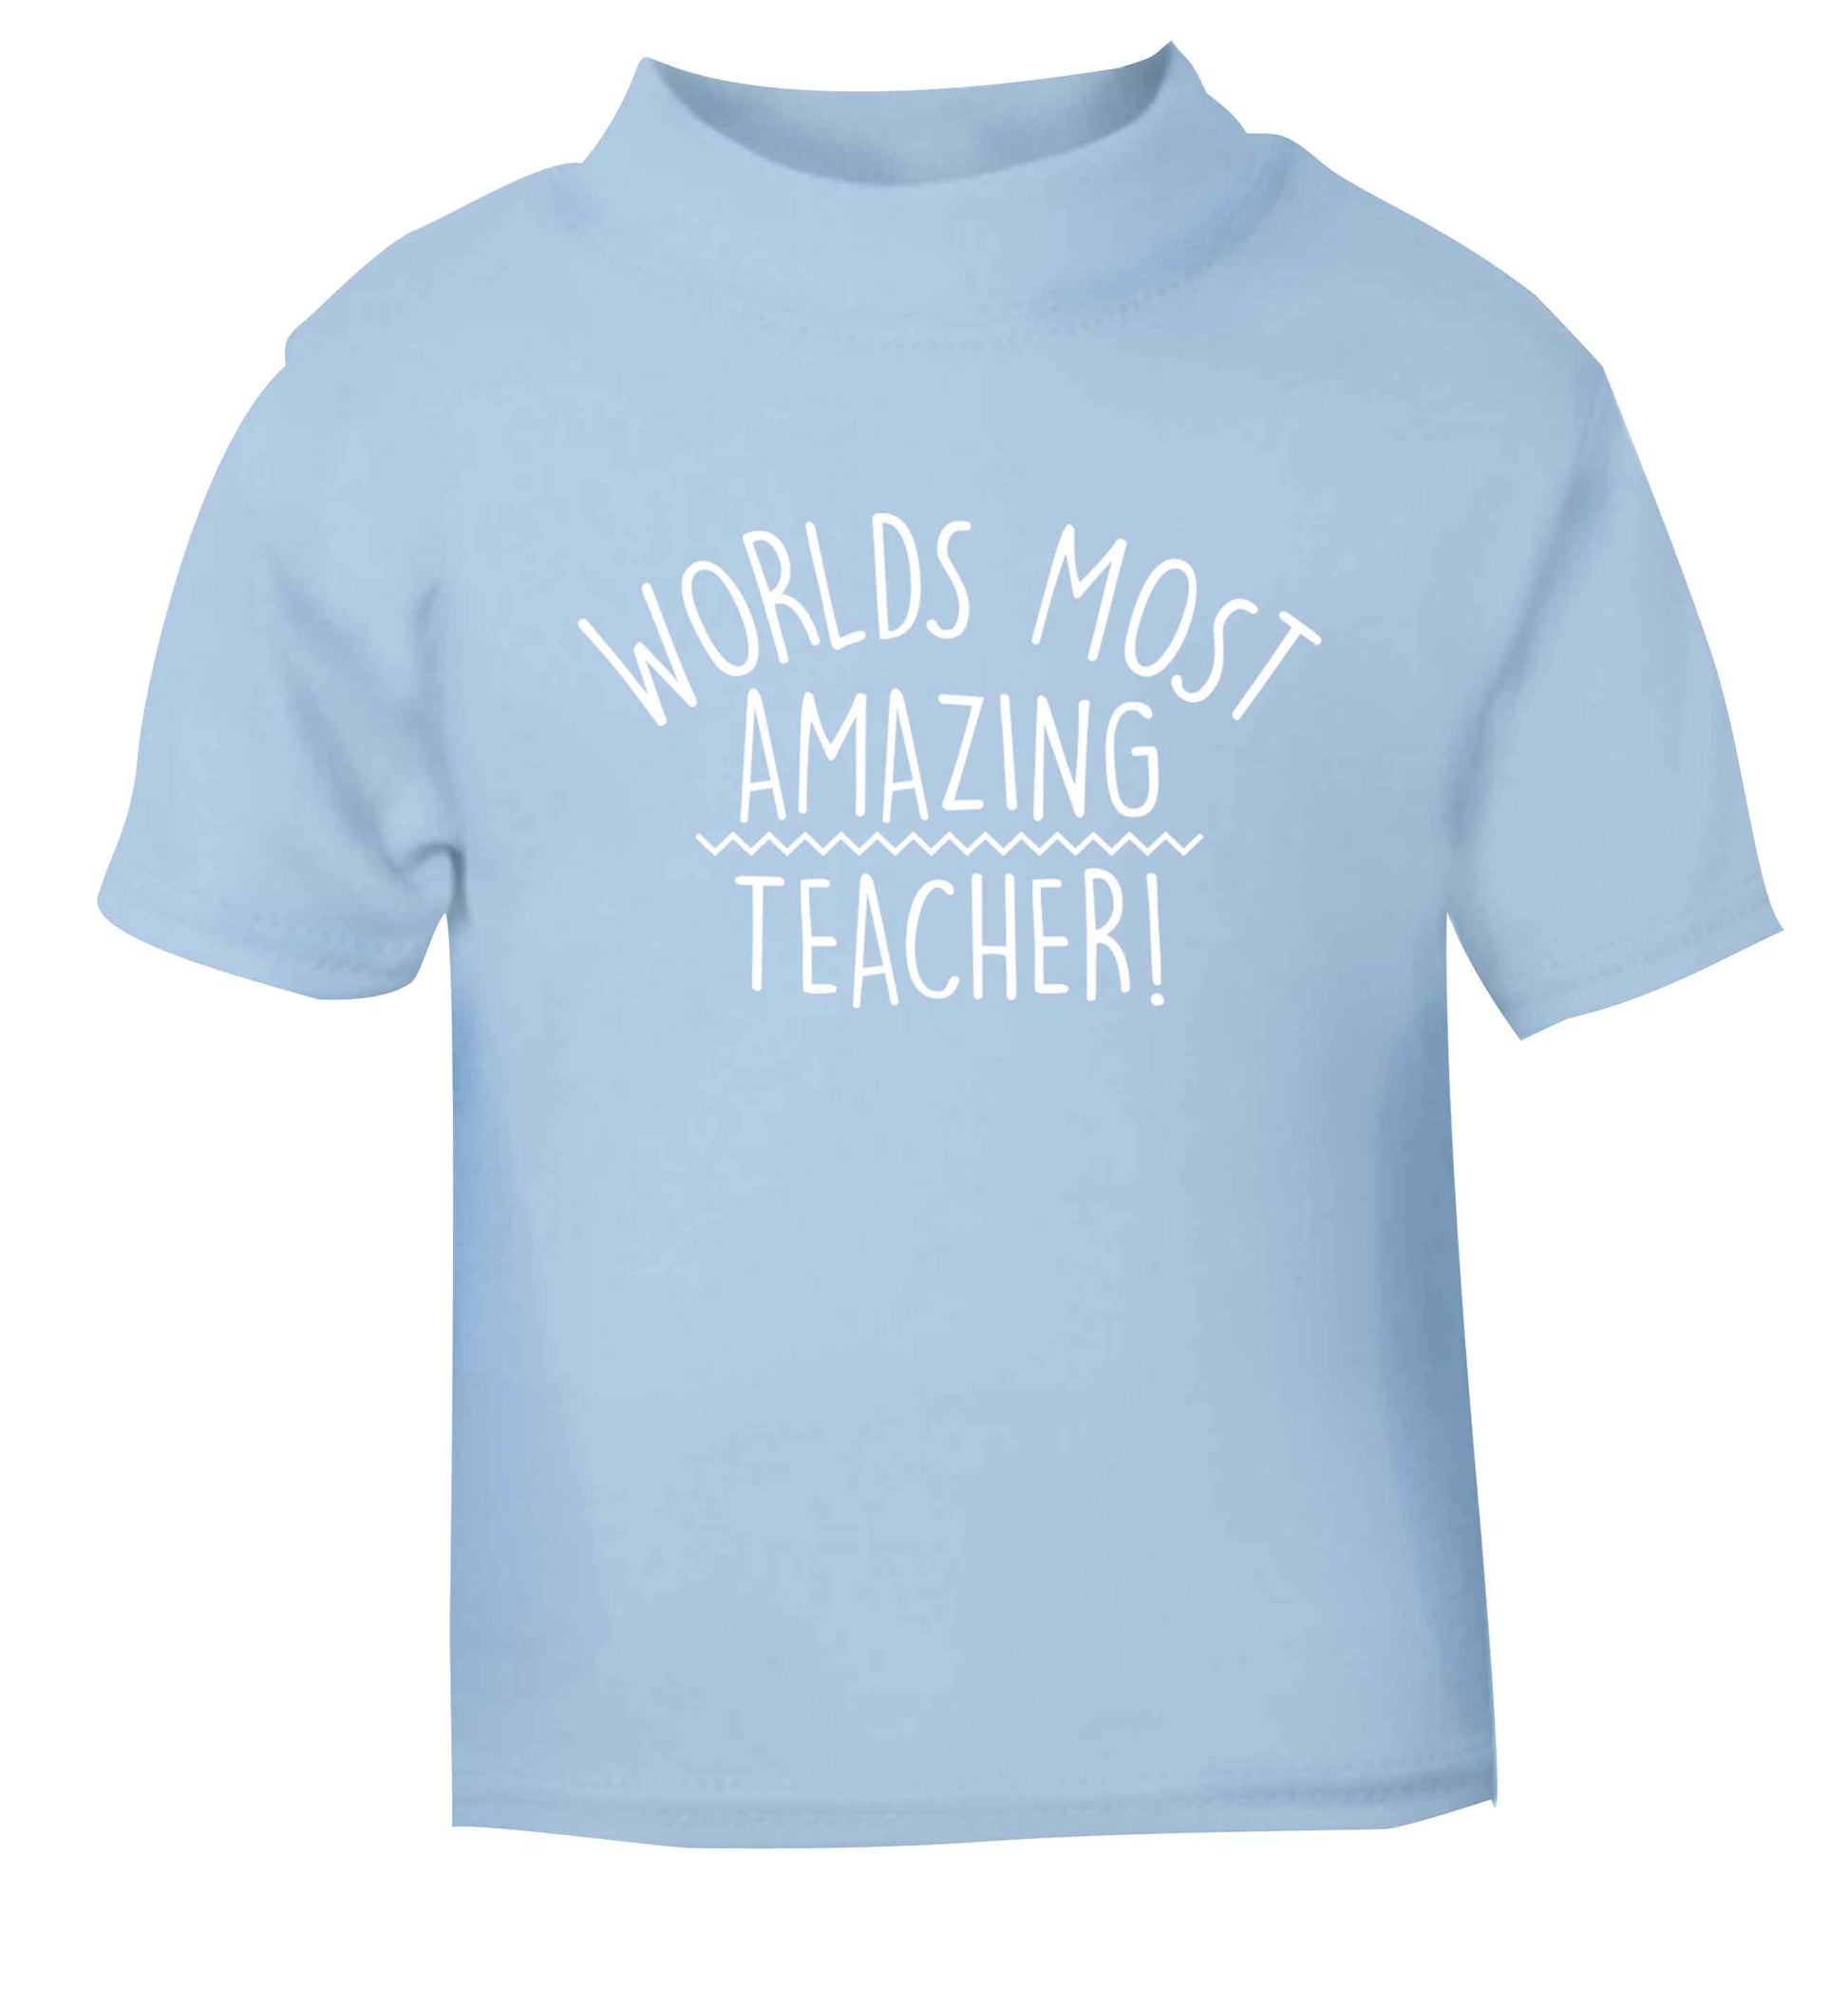 Worlds most amazing teacher light blue baby toddler Tshirt 2 Years